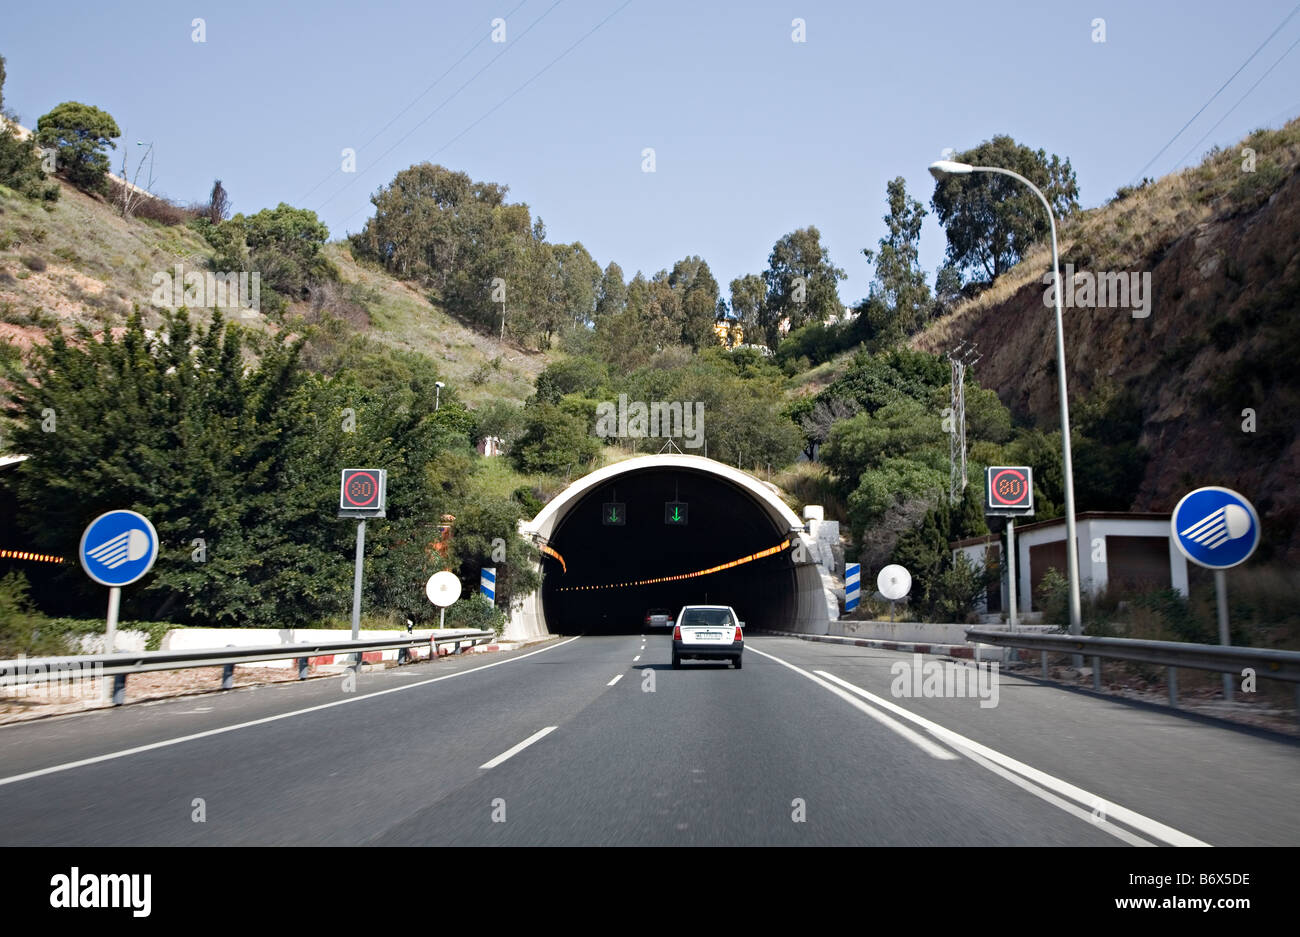 Verkehrszeichen und Tunnel auf der neuen Autobahn Autovia del Mediterraneo A7 E15 Costa del Sol-Andalucia Spanien Stockfoto